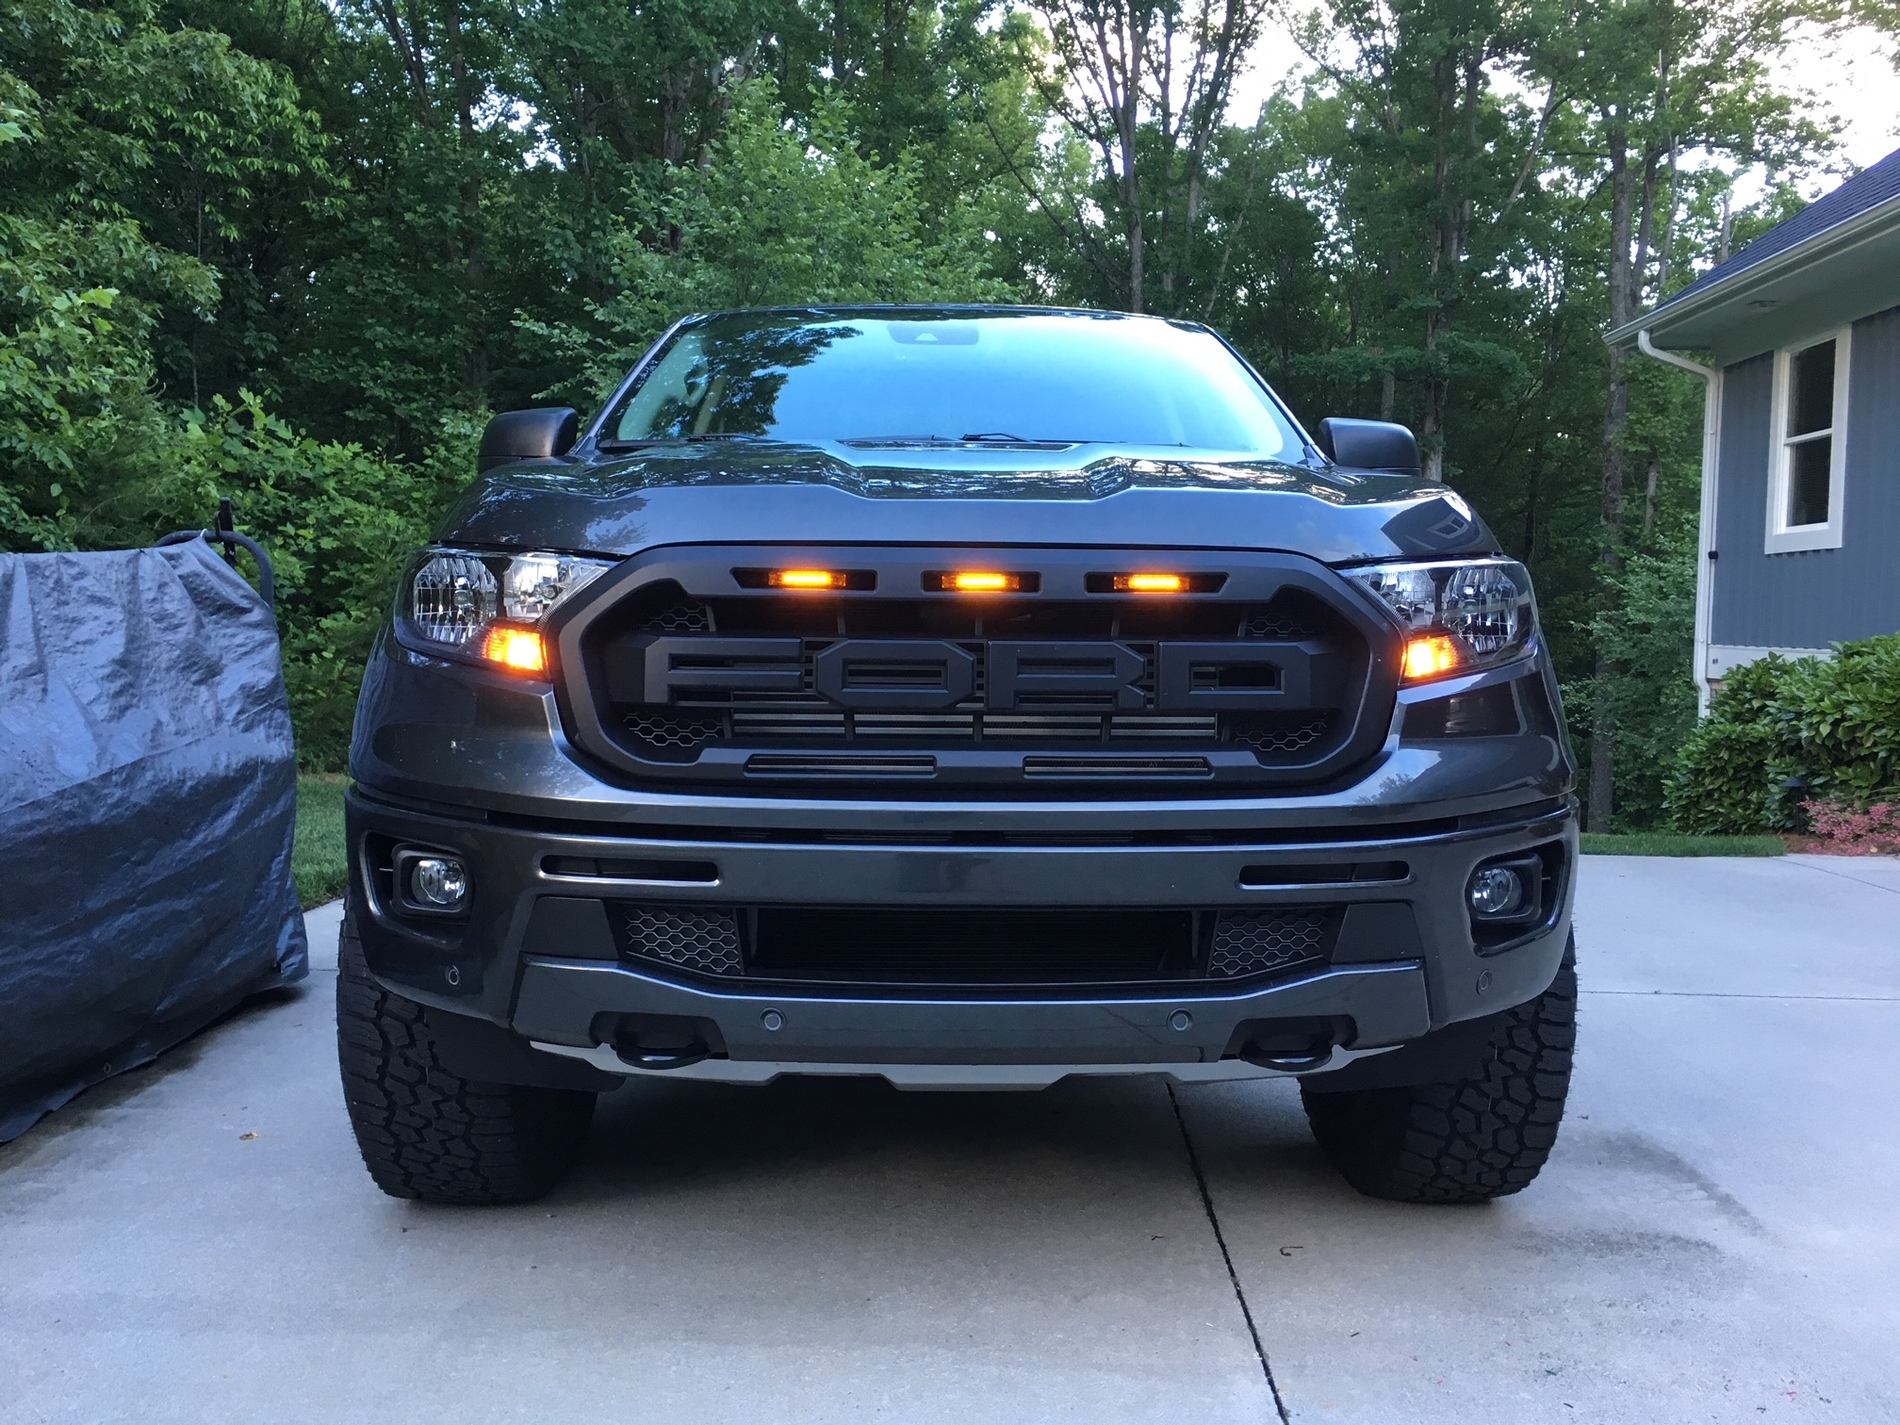 Ford Ranger 2019 #olaf Ranger Completed SuGLYg2